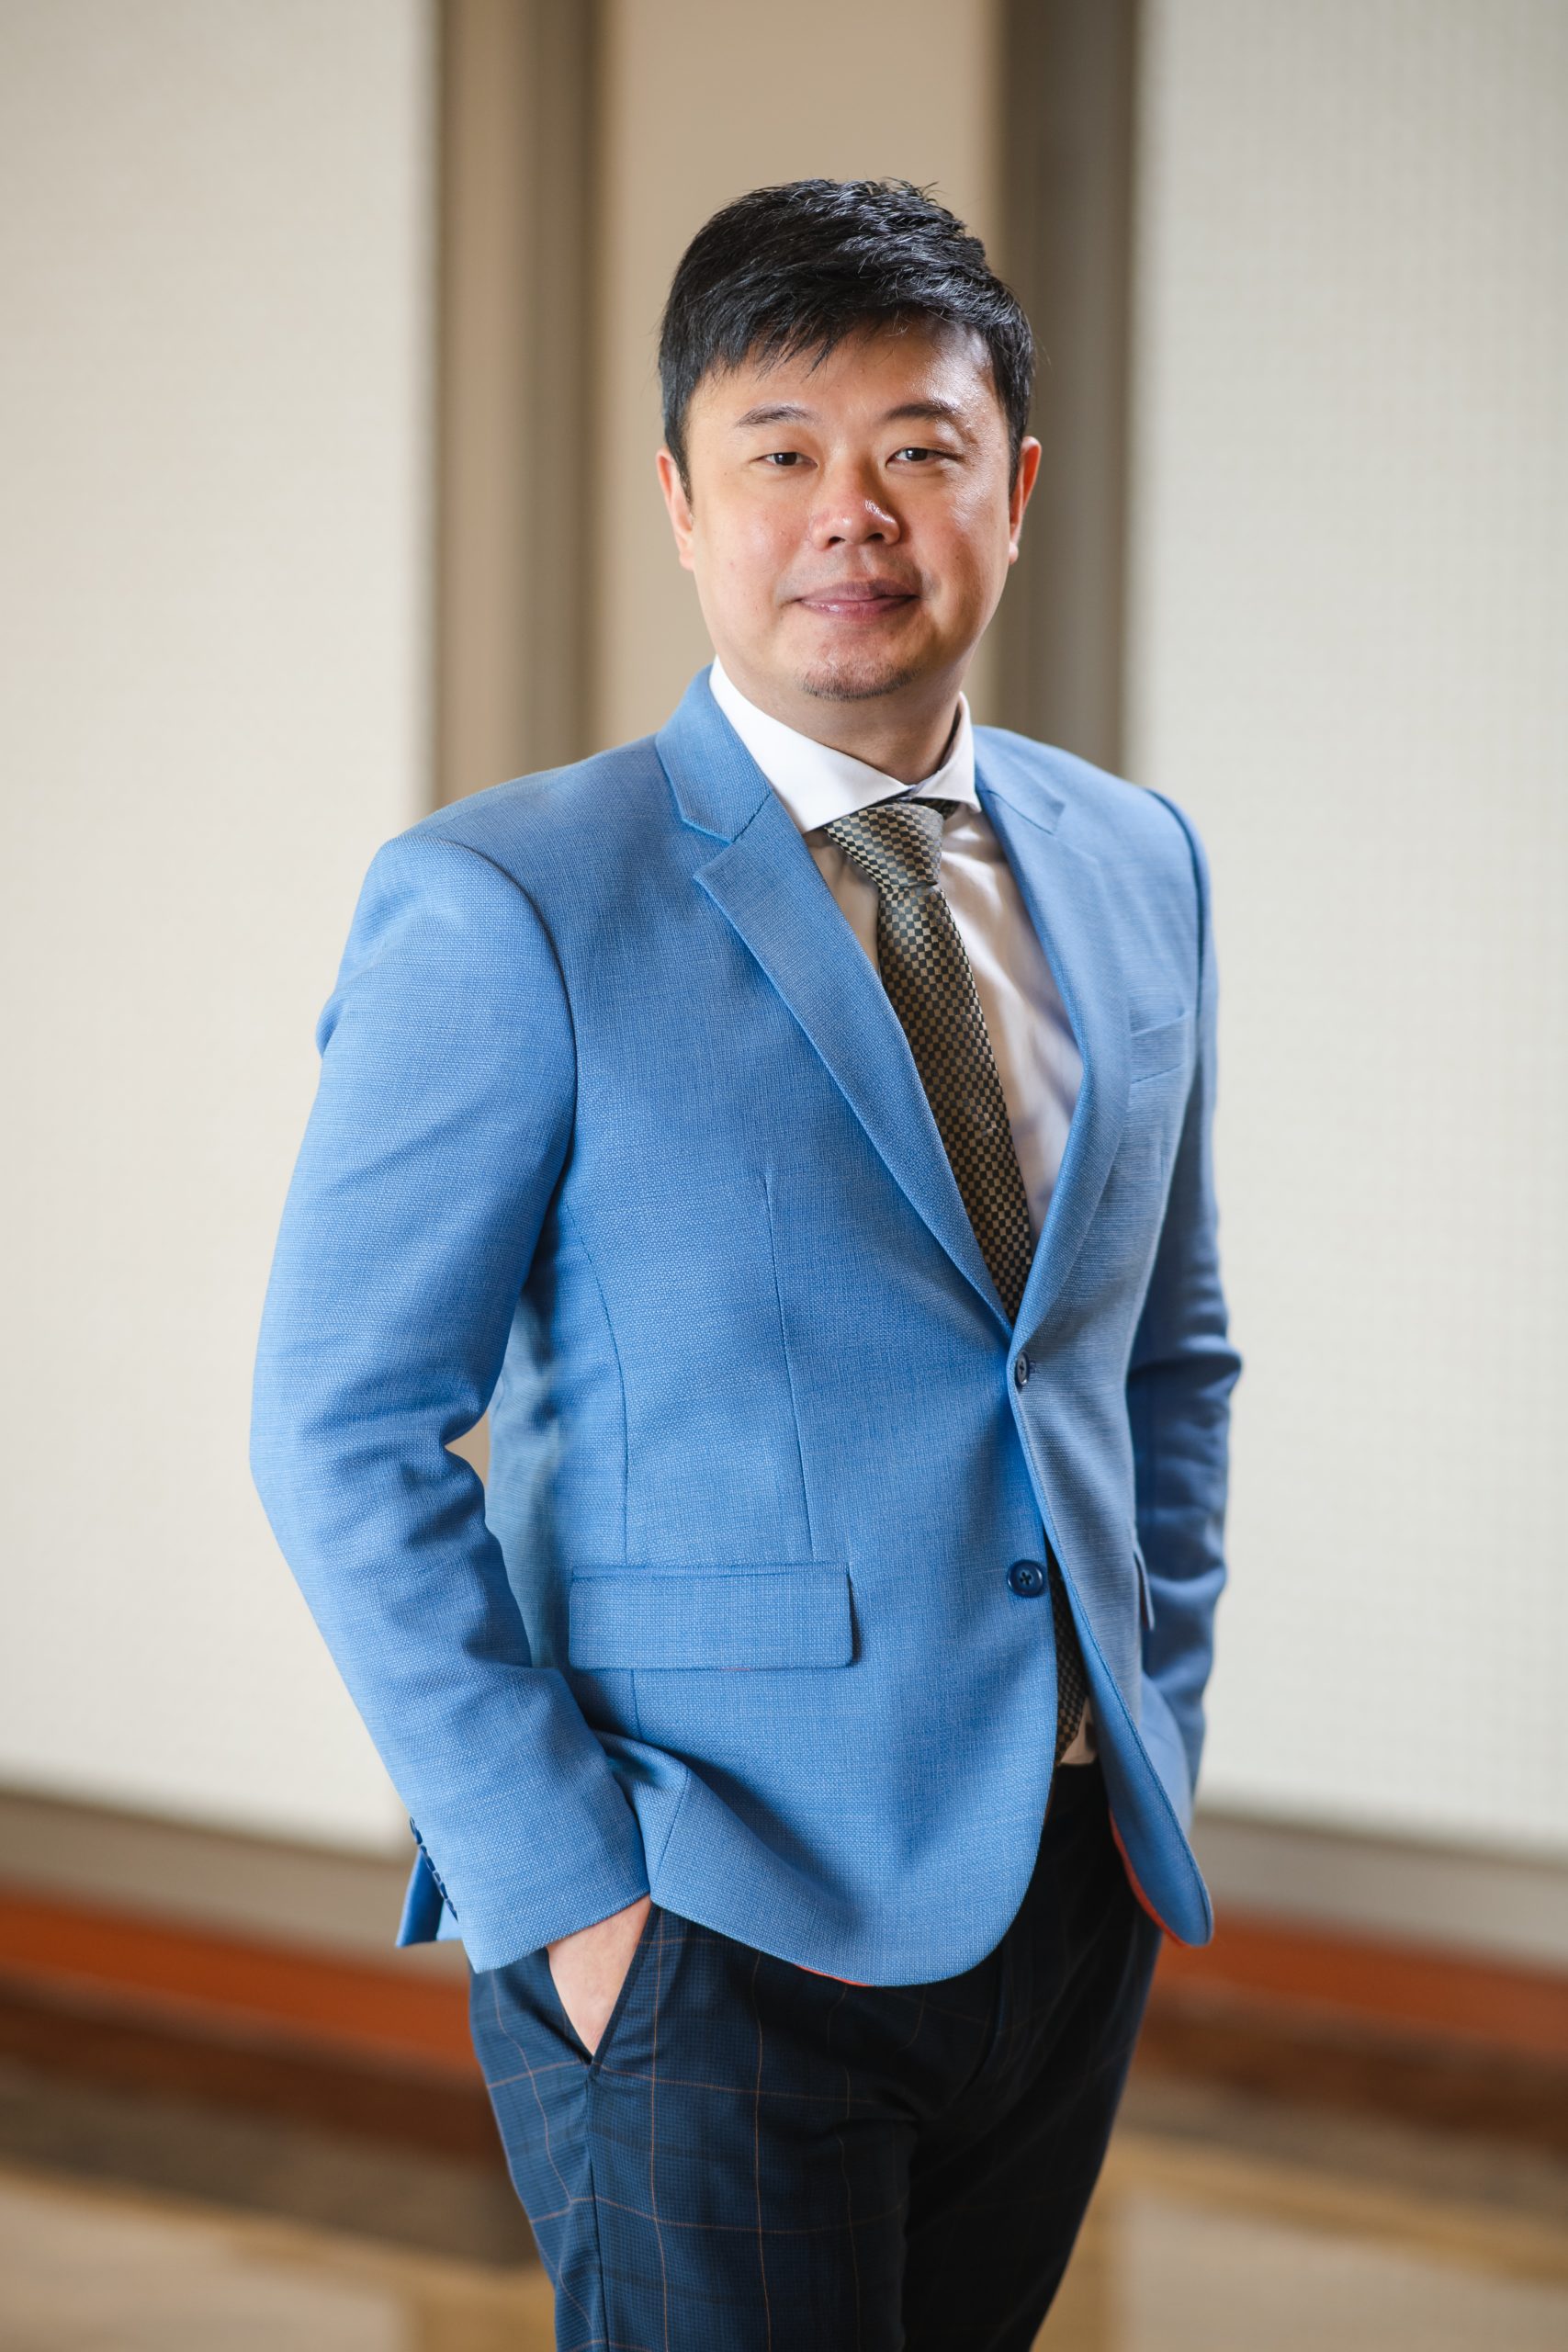 Gerrard Tan Apex Group Singapore | Gerrard Tan Financial Services Associate Director